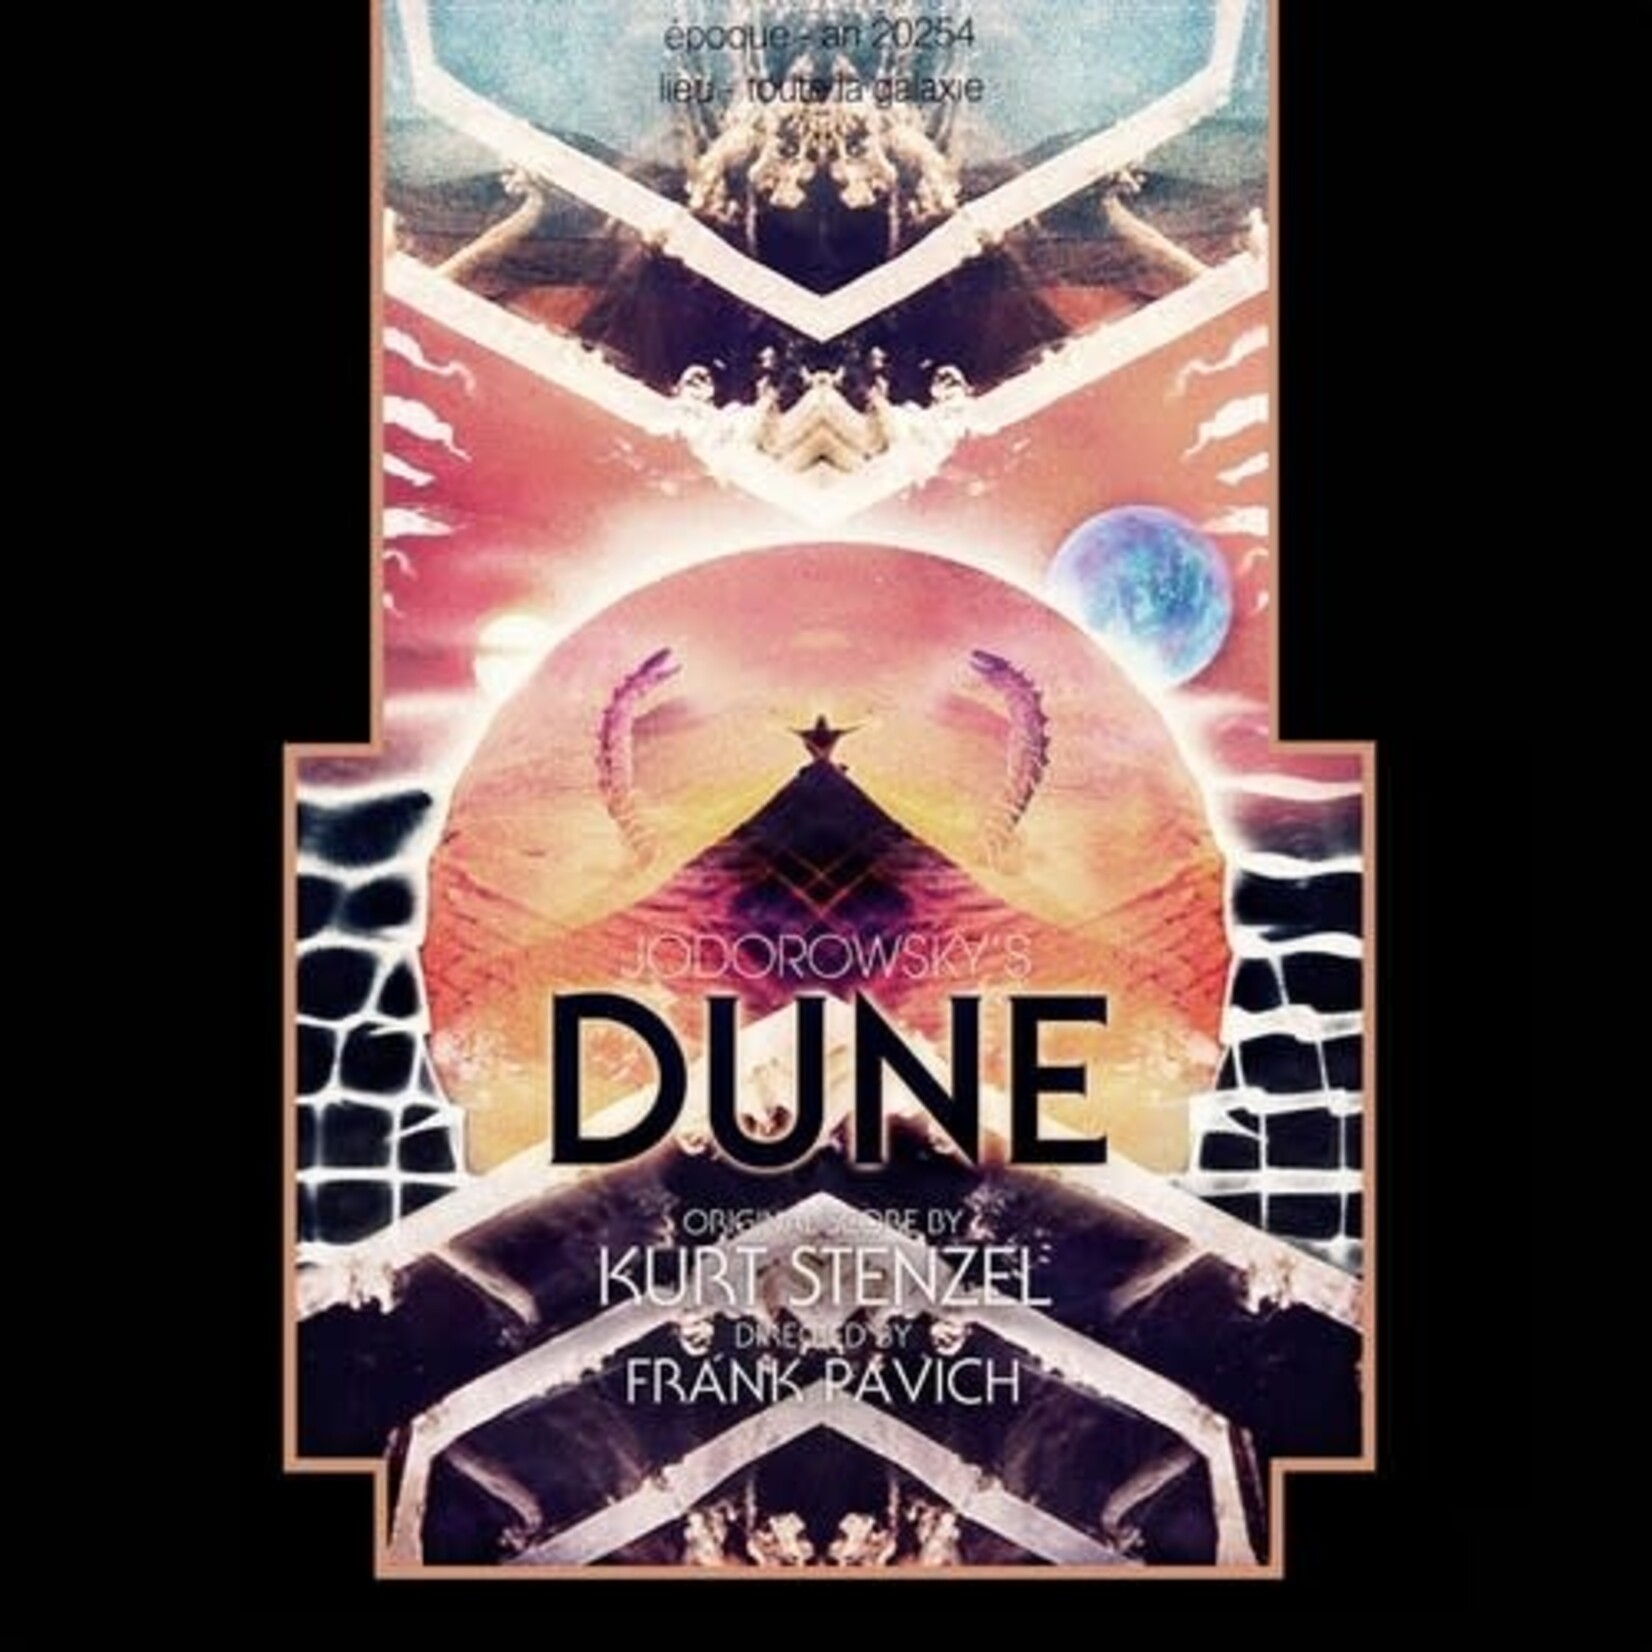 [New] Kurt Stenzel - Jodorowsky's Dune  (2LP, soundtrack, transparent blue with white vinyl)